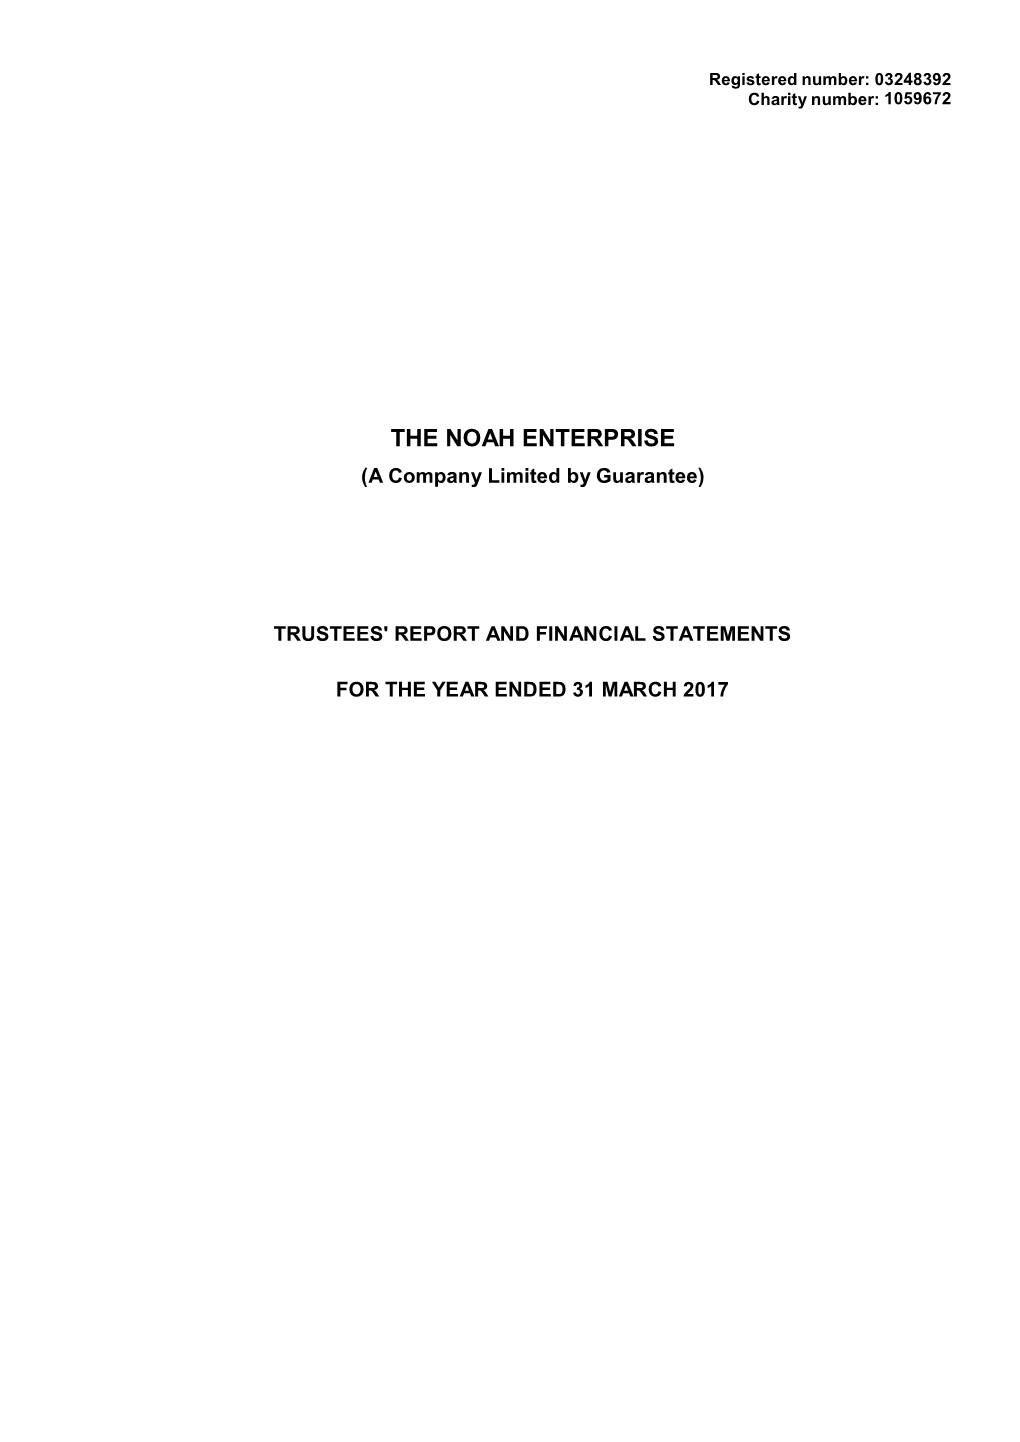 THE NOAH ENTERPRISE (A Company Limited by Guarantee)